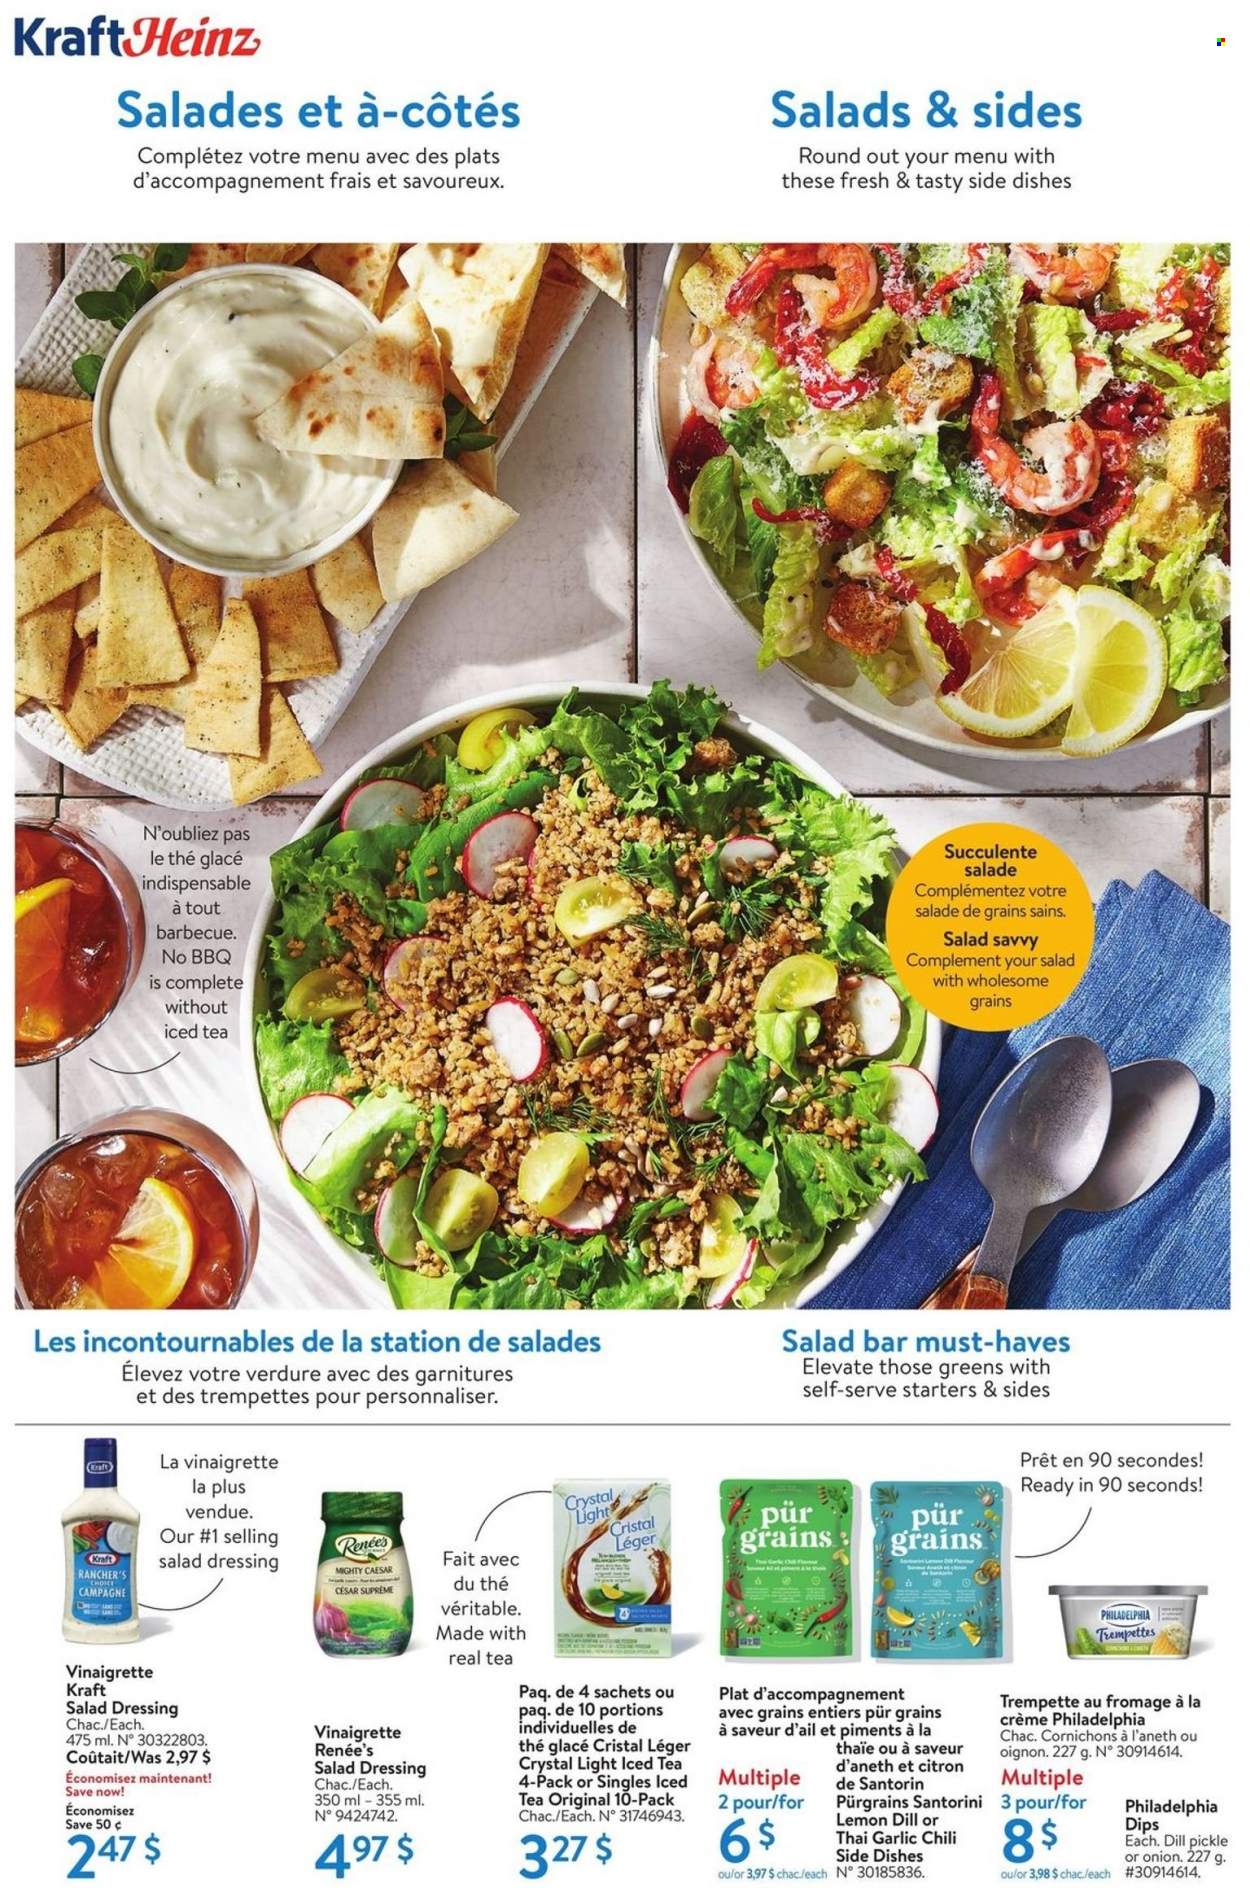 thumbnail - Walmart Flyer - May 12, 2022 - June 29, 2022 - Sales products - garlic, onion, Kraft®, dill pickle, dill, salad dressing, vinaigrette dressing, dressing, ice tea, Philadelphia. Page 9.